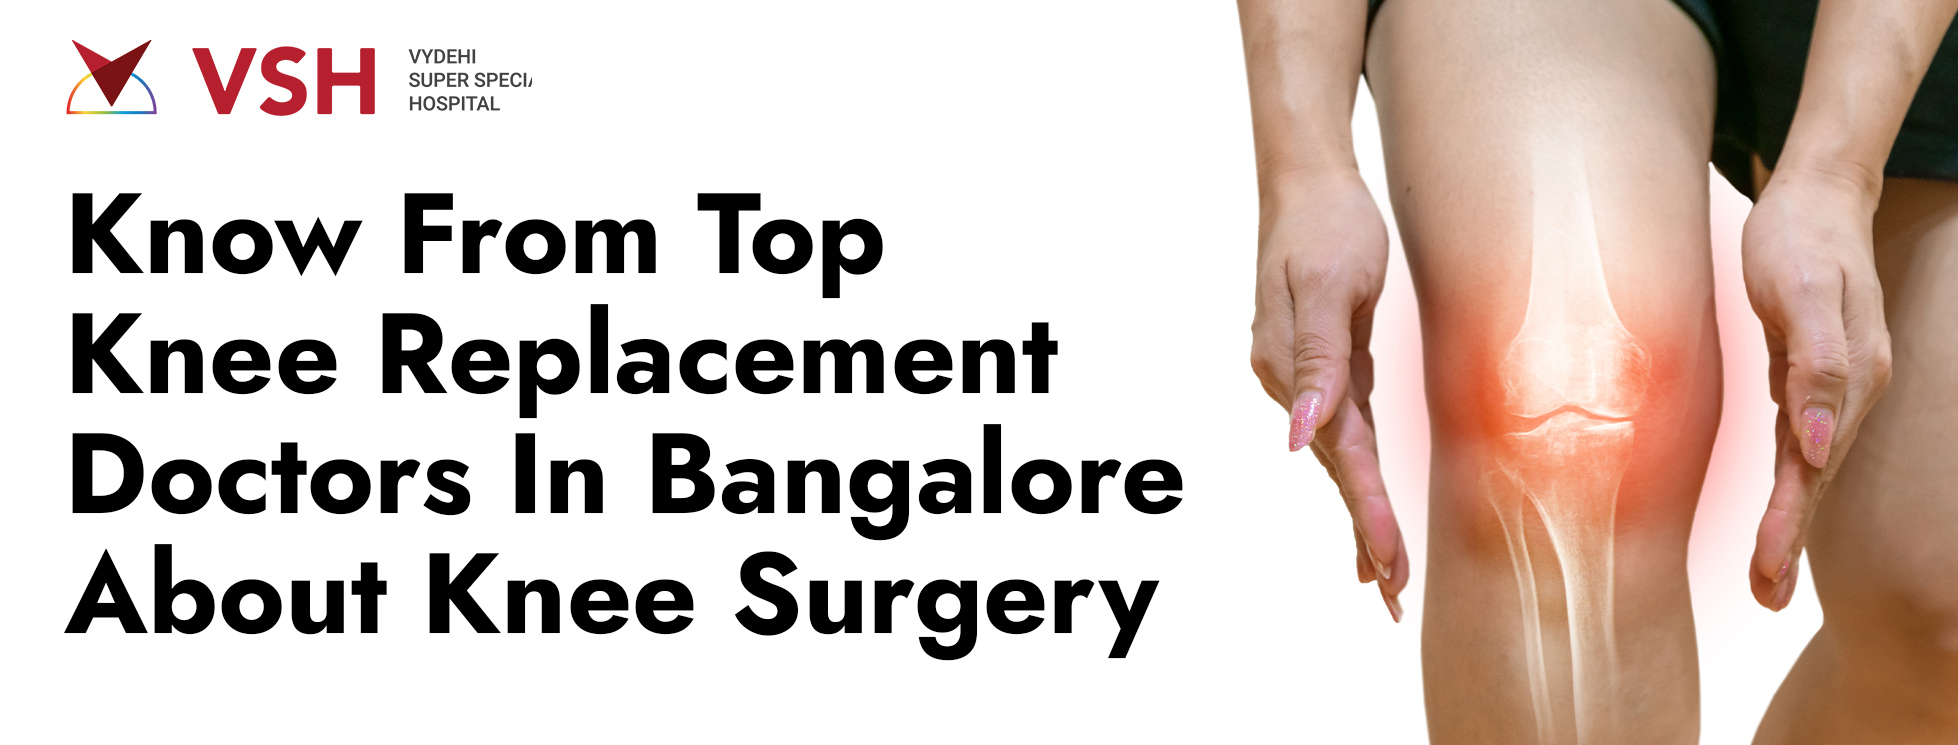 Top Knee Replacement Doctors In Bangalore